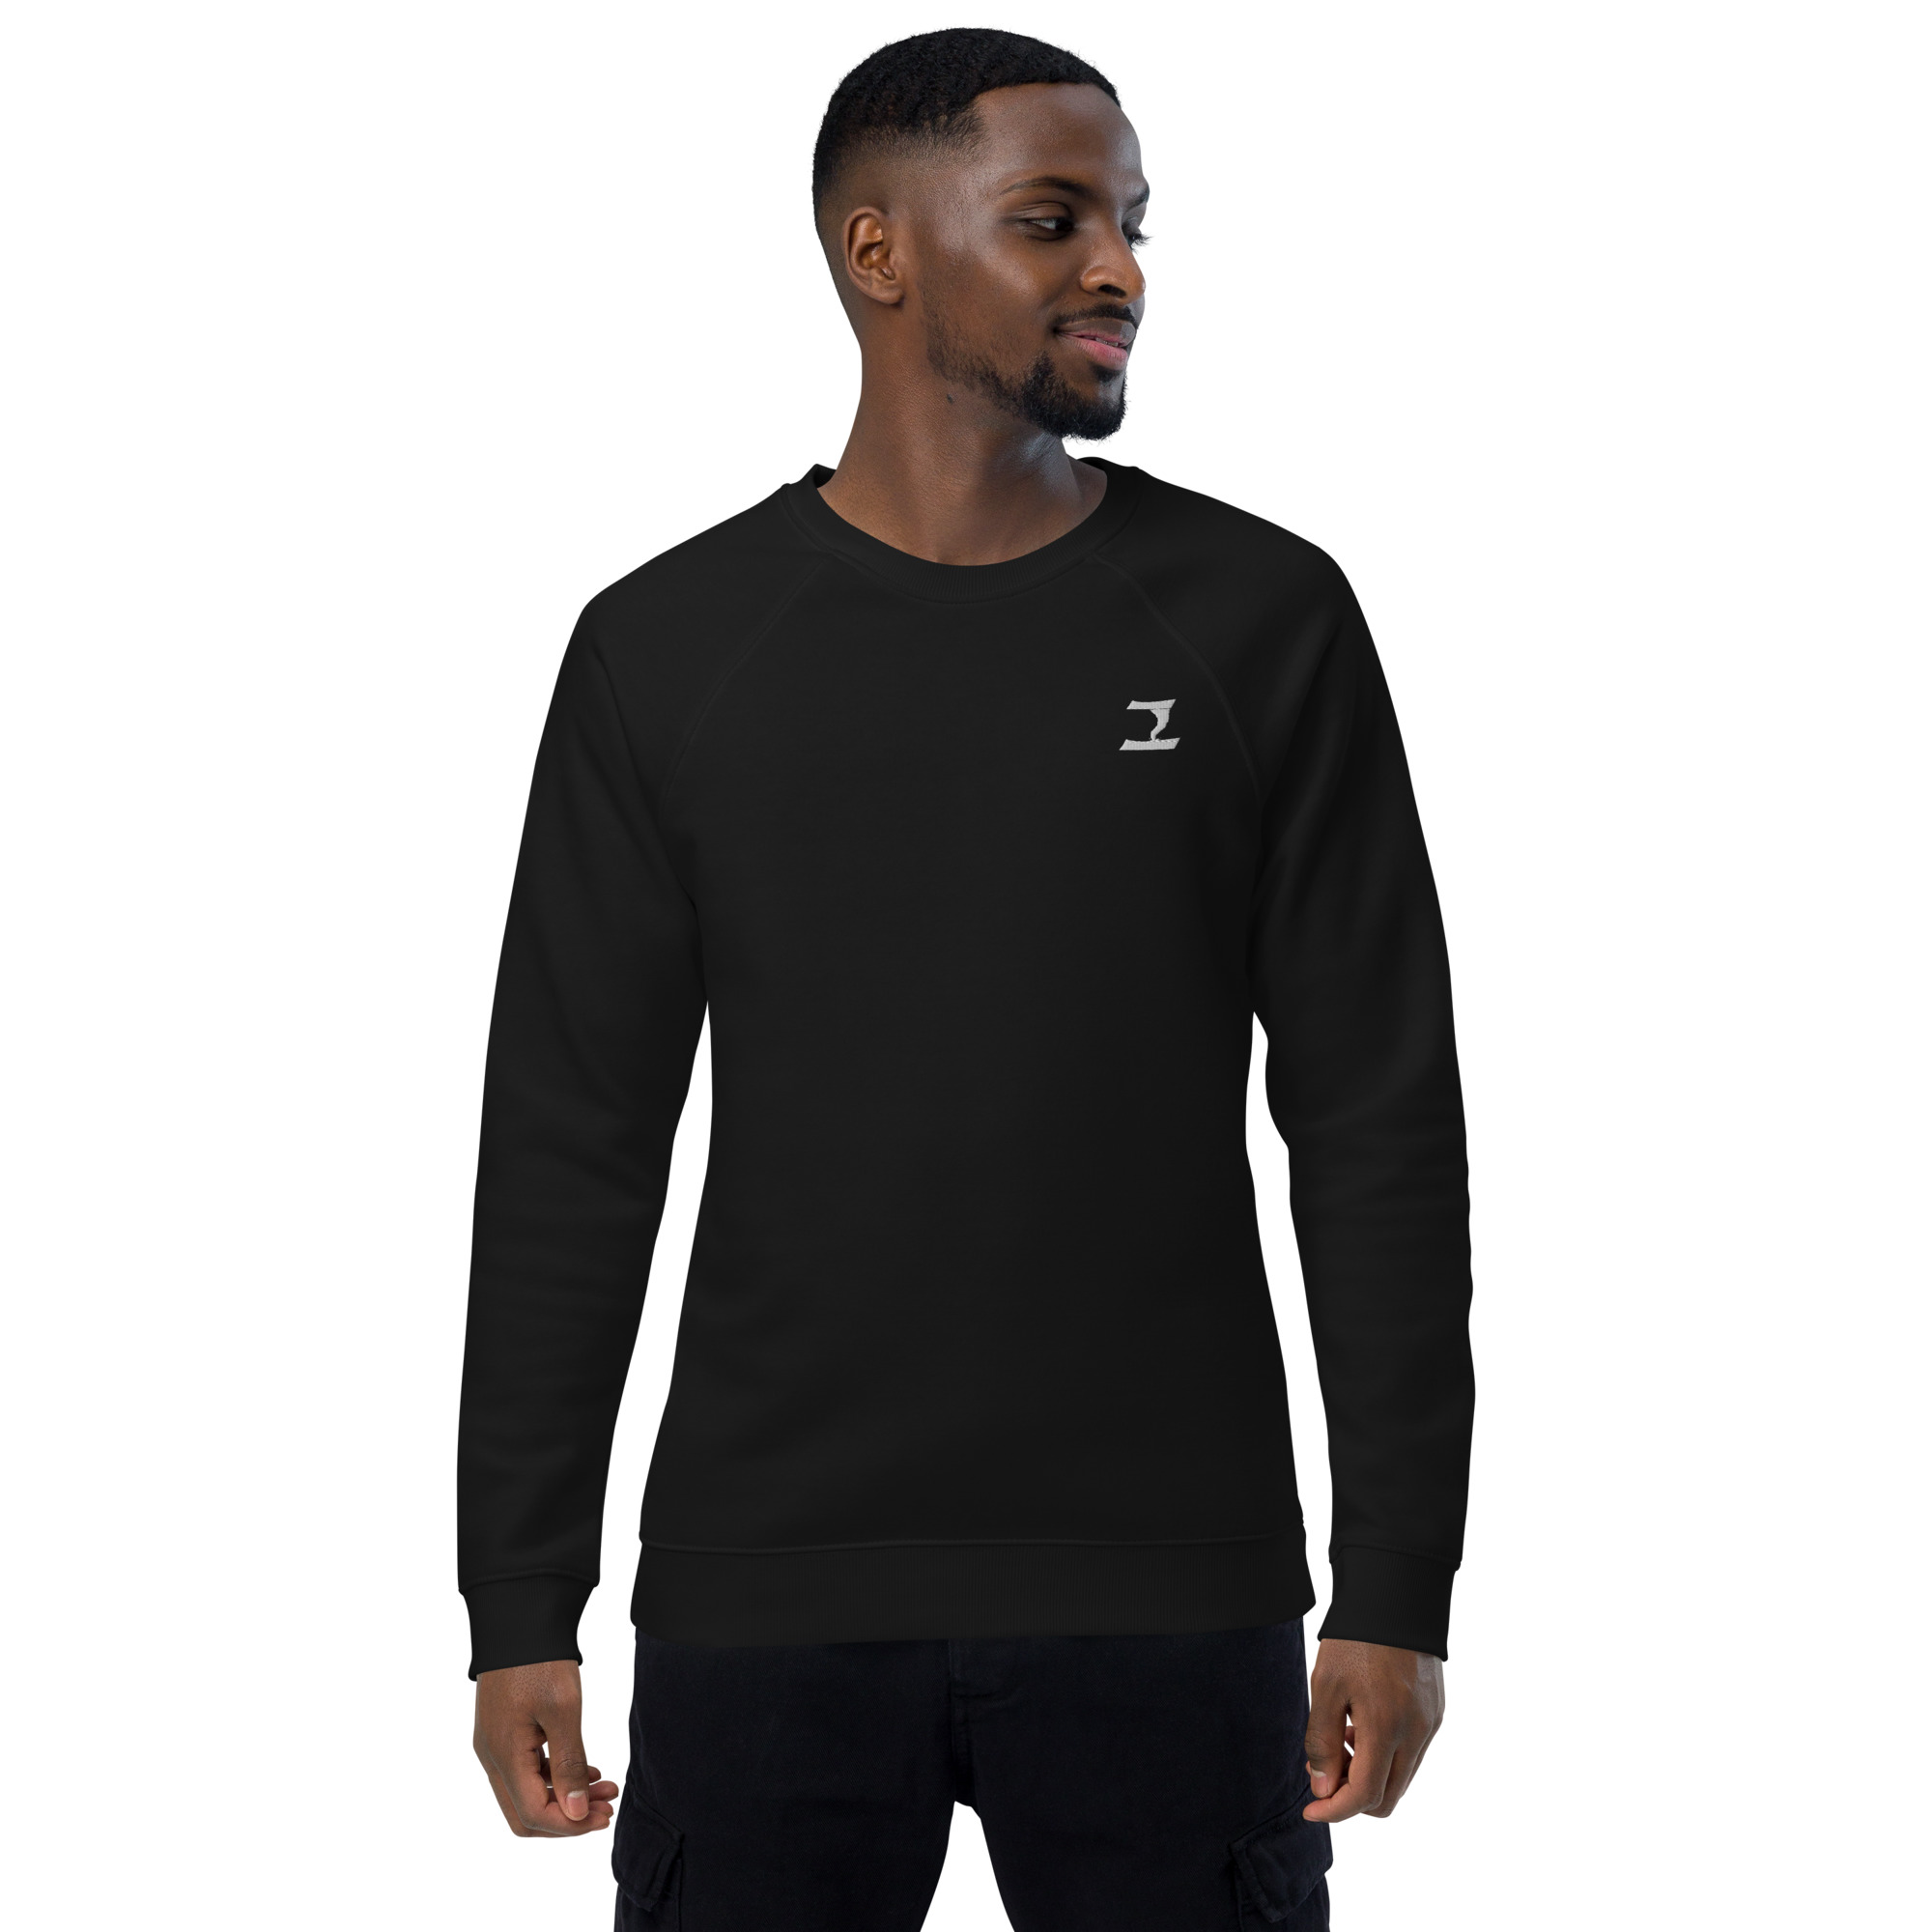 unisex-organic-raglan-sweatshirt-black-front-6334e2624a8da.jpg